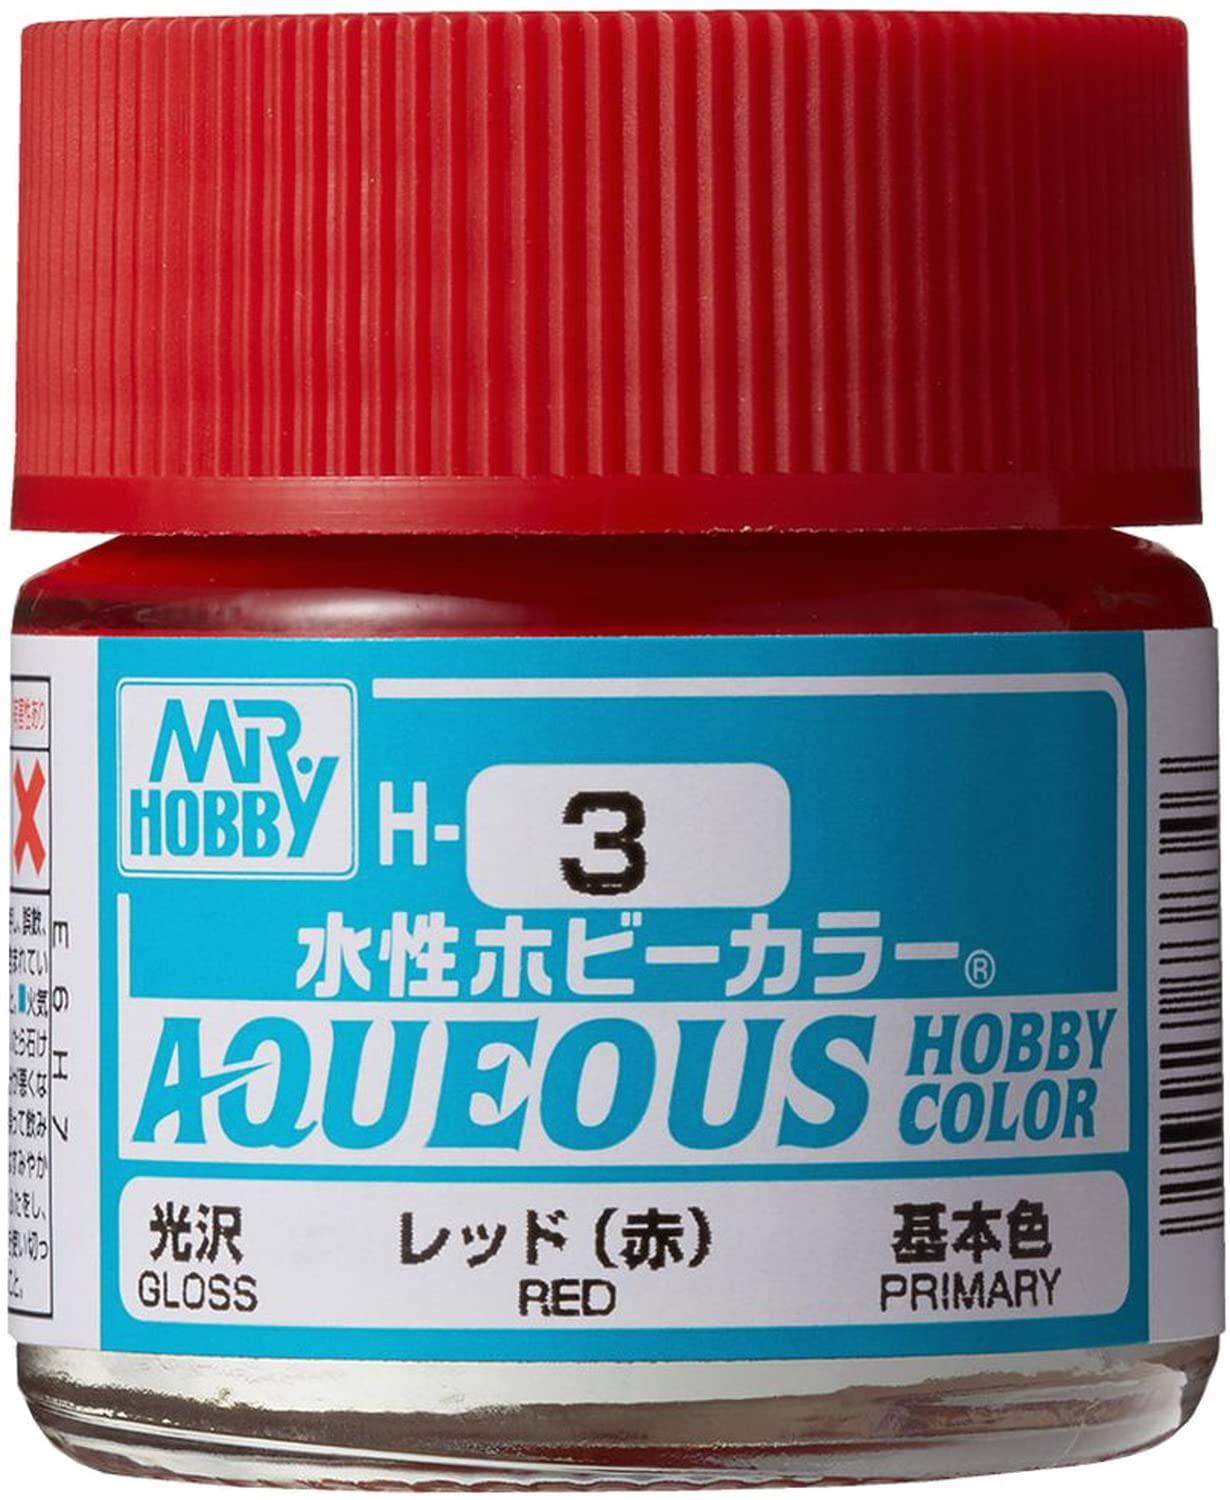 Mr. Hobby Aqueous Hobby Color H3 Gloss Red 10ml Bottle